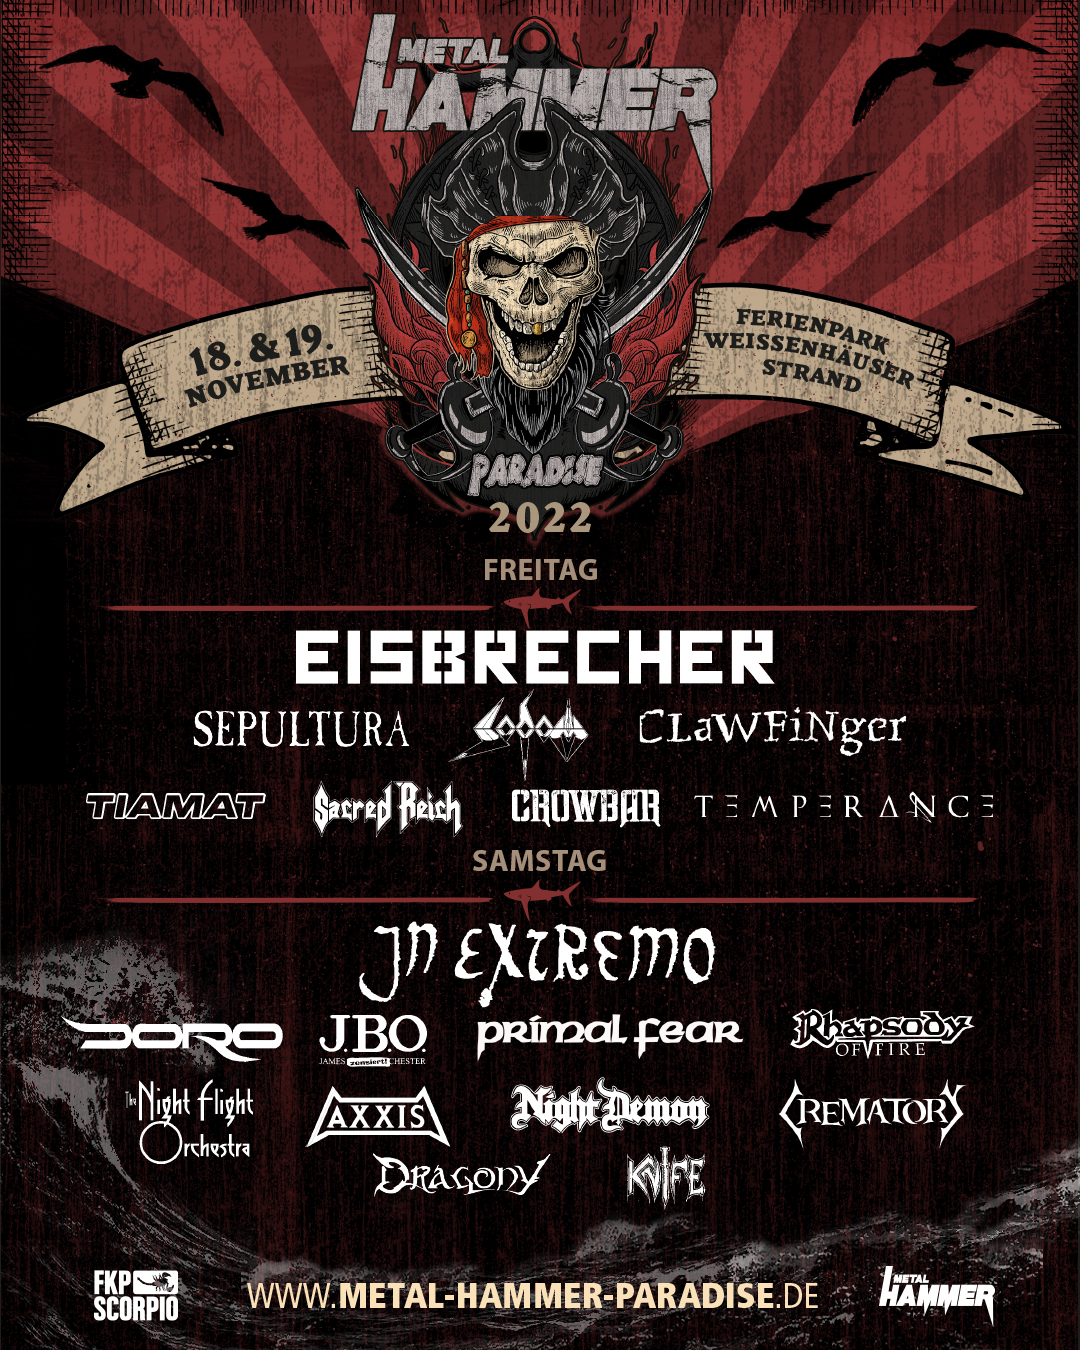 Metal Hammer Pardise 2022, 18.-19.11.2022 – Vorbericht